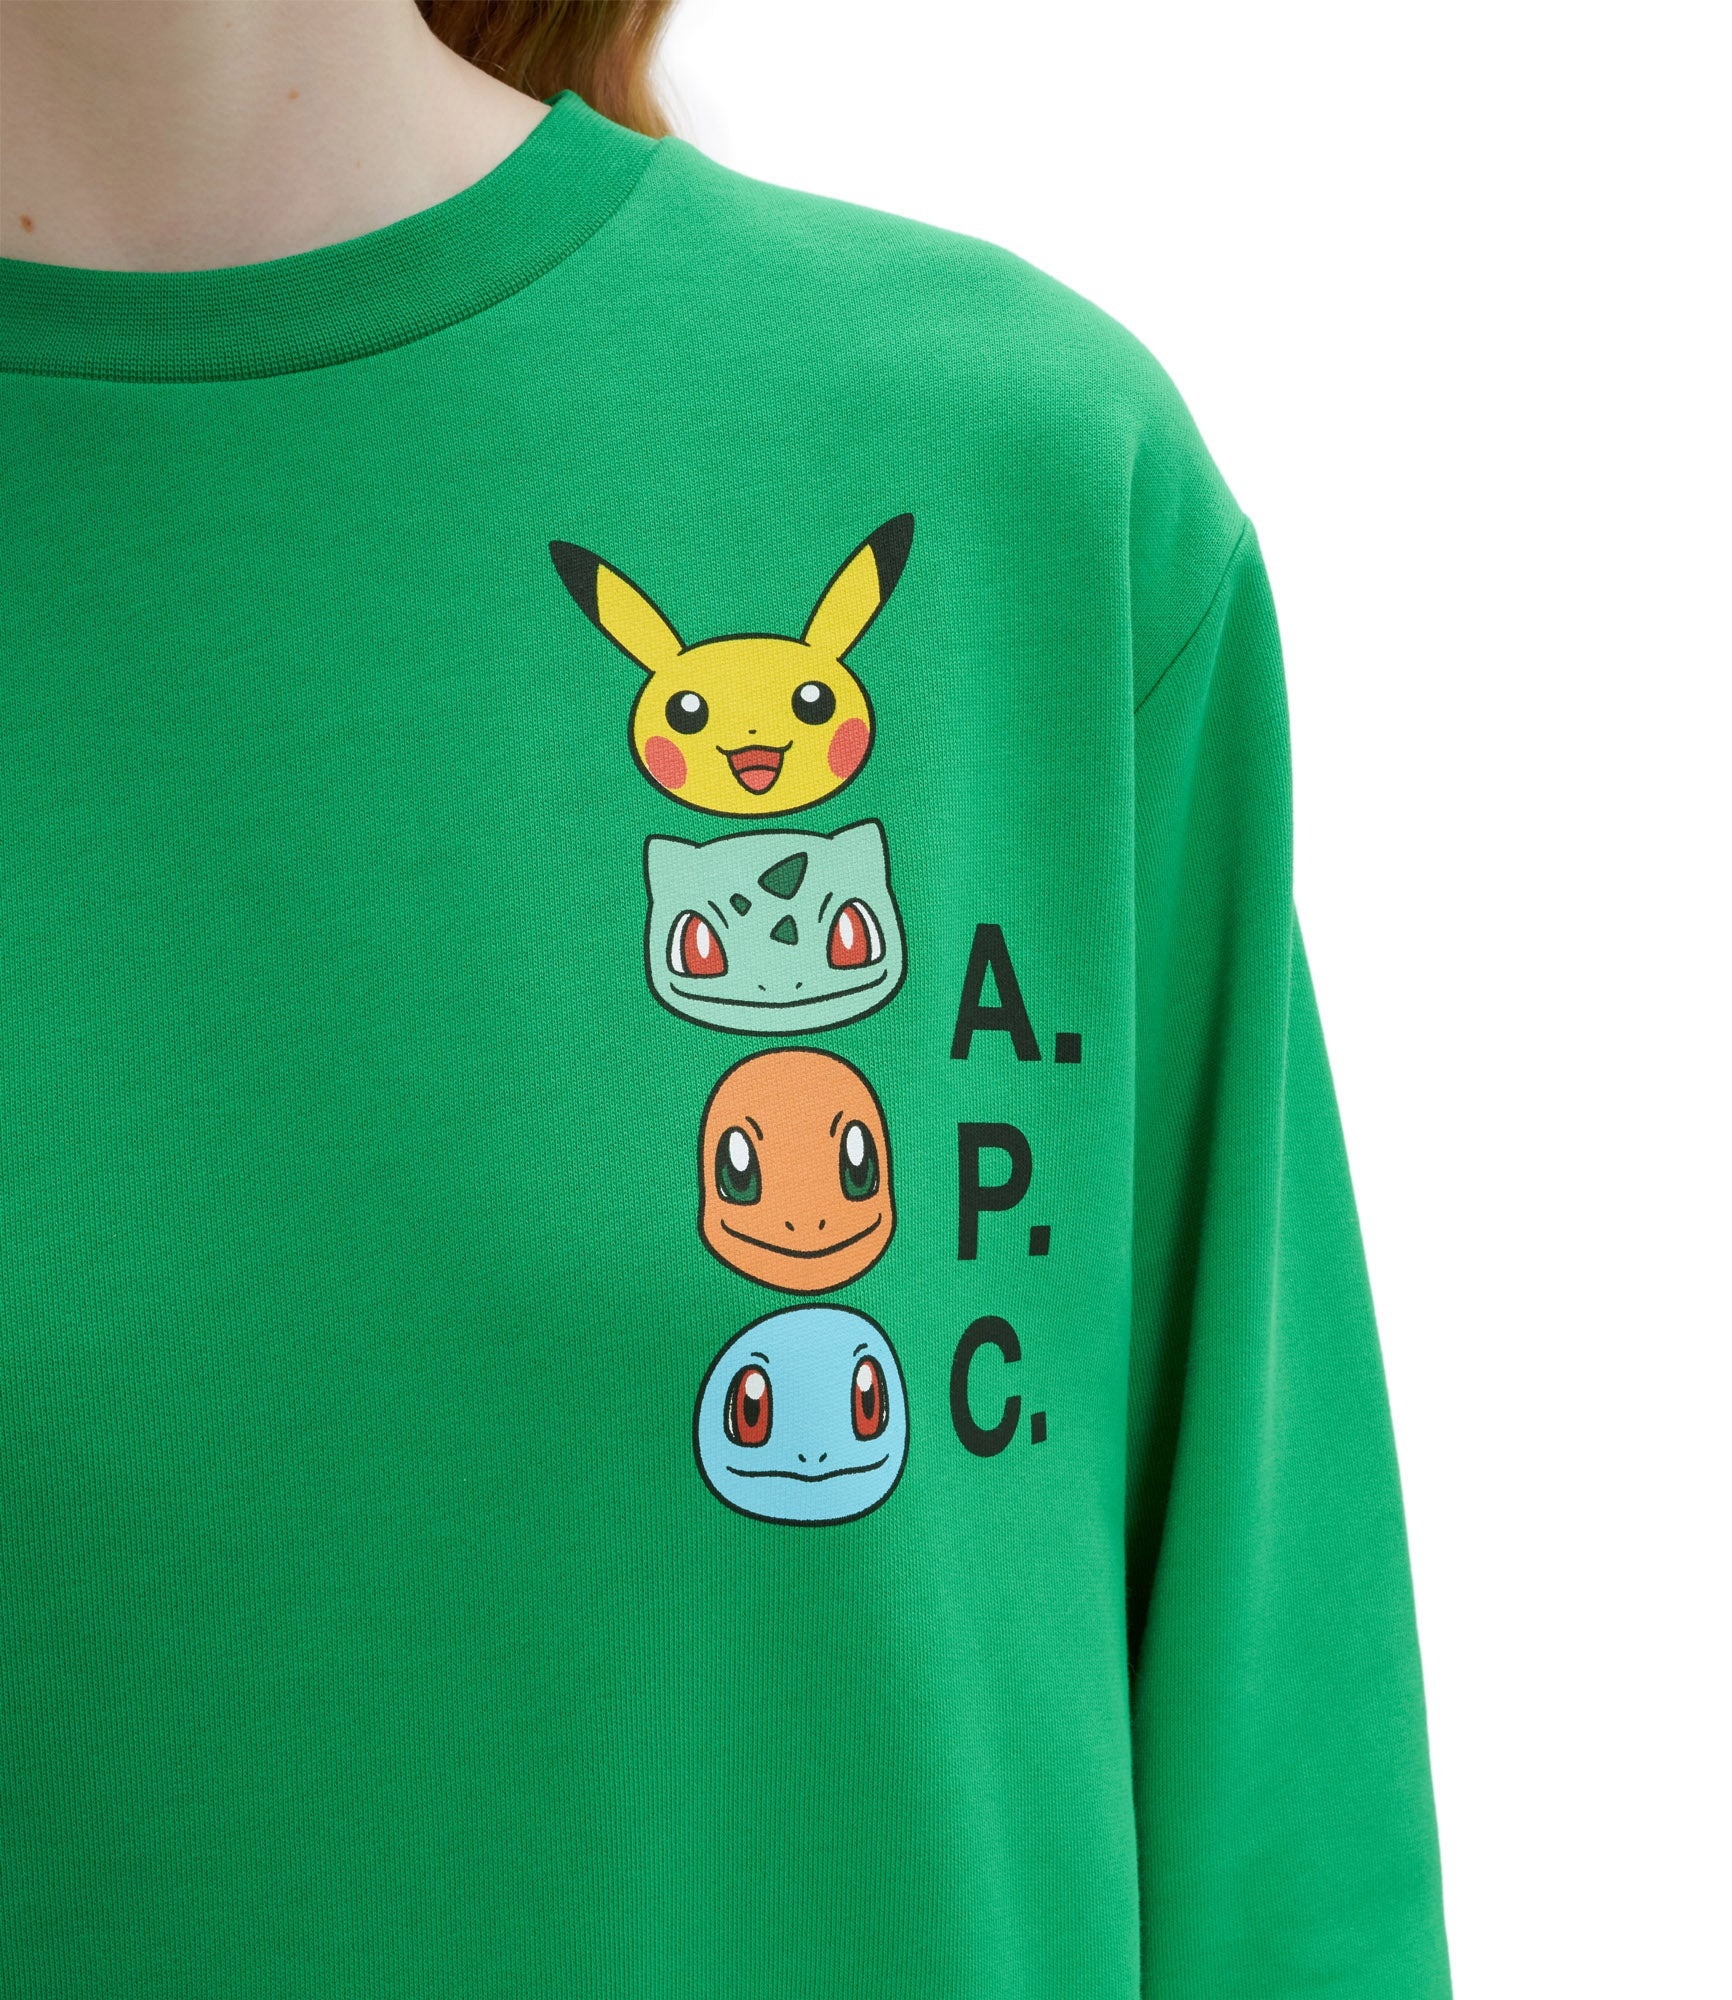 Pokémon The Portrait sweatshirt - 5